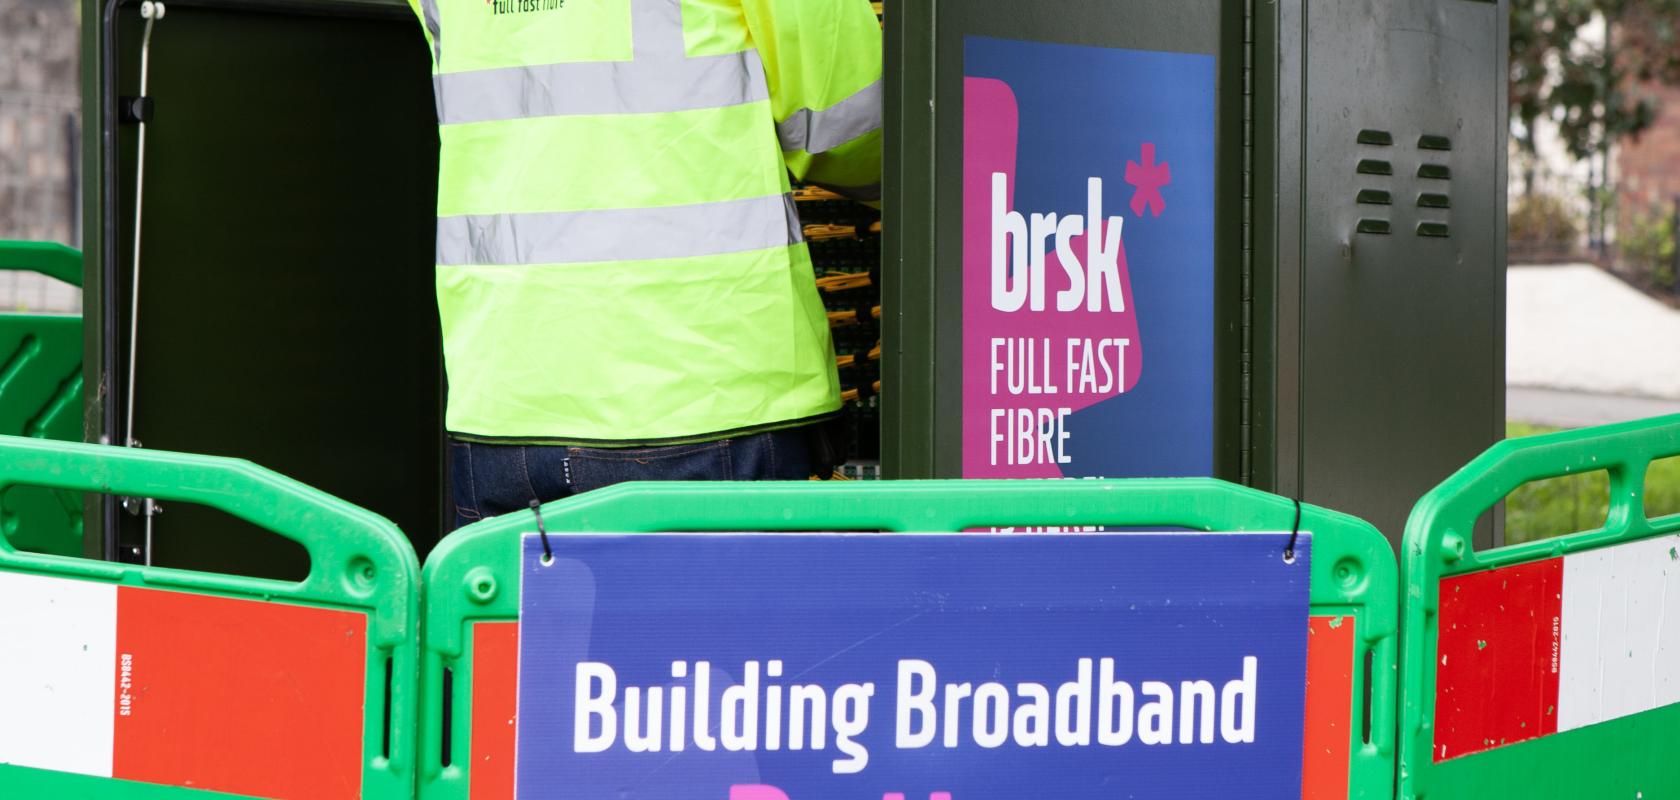 Brsk extends Lancashire full-fibre rollout to Darwen